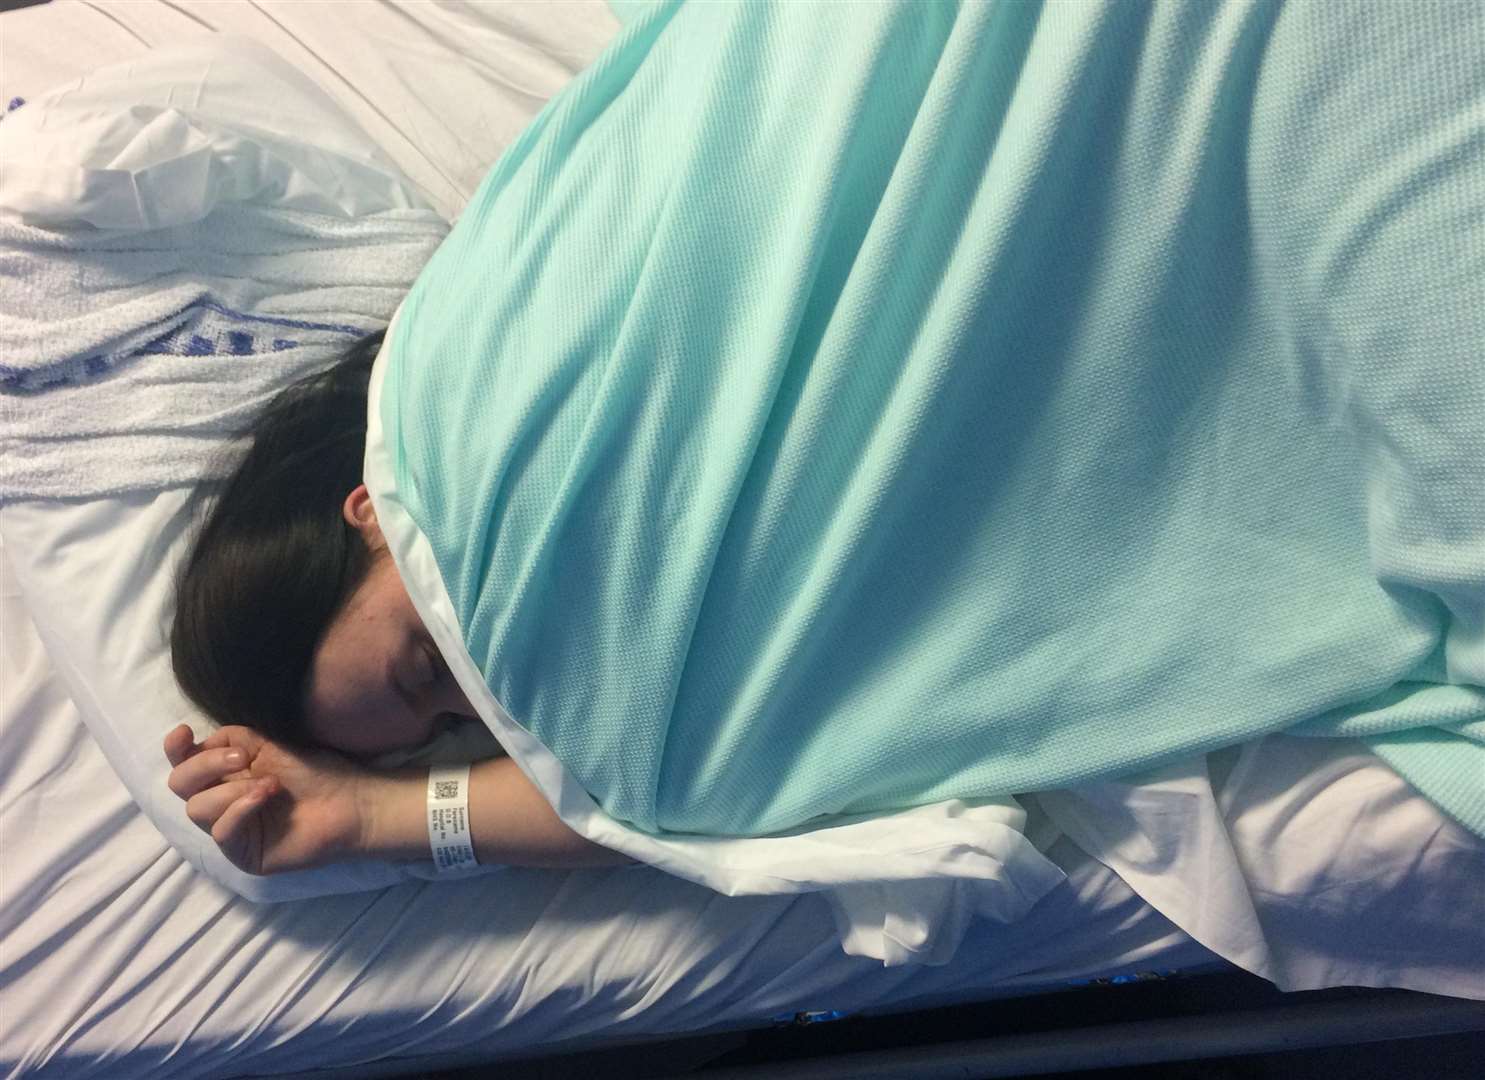 Ellie-Jay Taylor in hospital